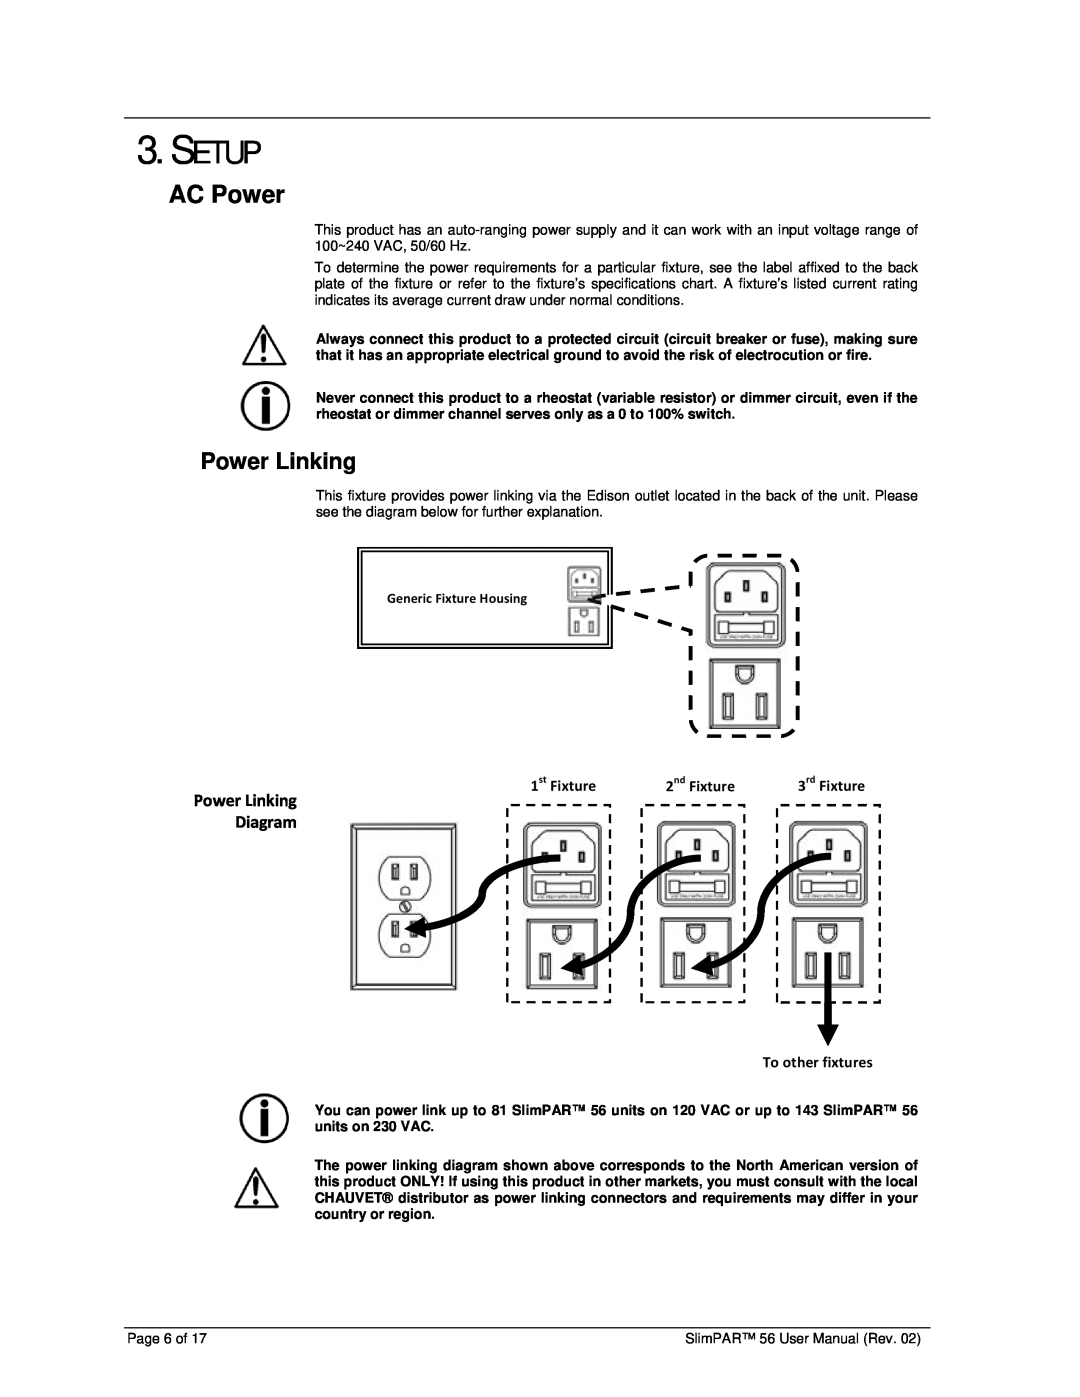 Chauvet 56 user manual Setup, AC Power, Power Linking, Diagram, st Fixture, nd Fixture, r d Fixture, To other fixtures 